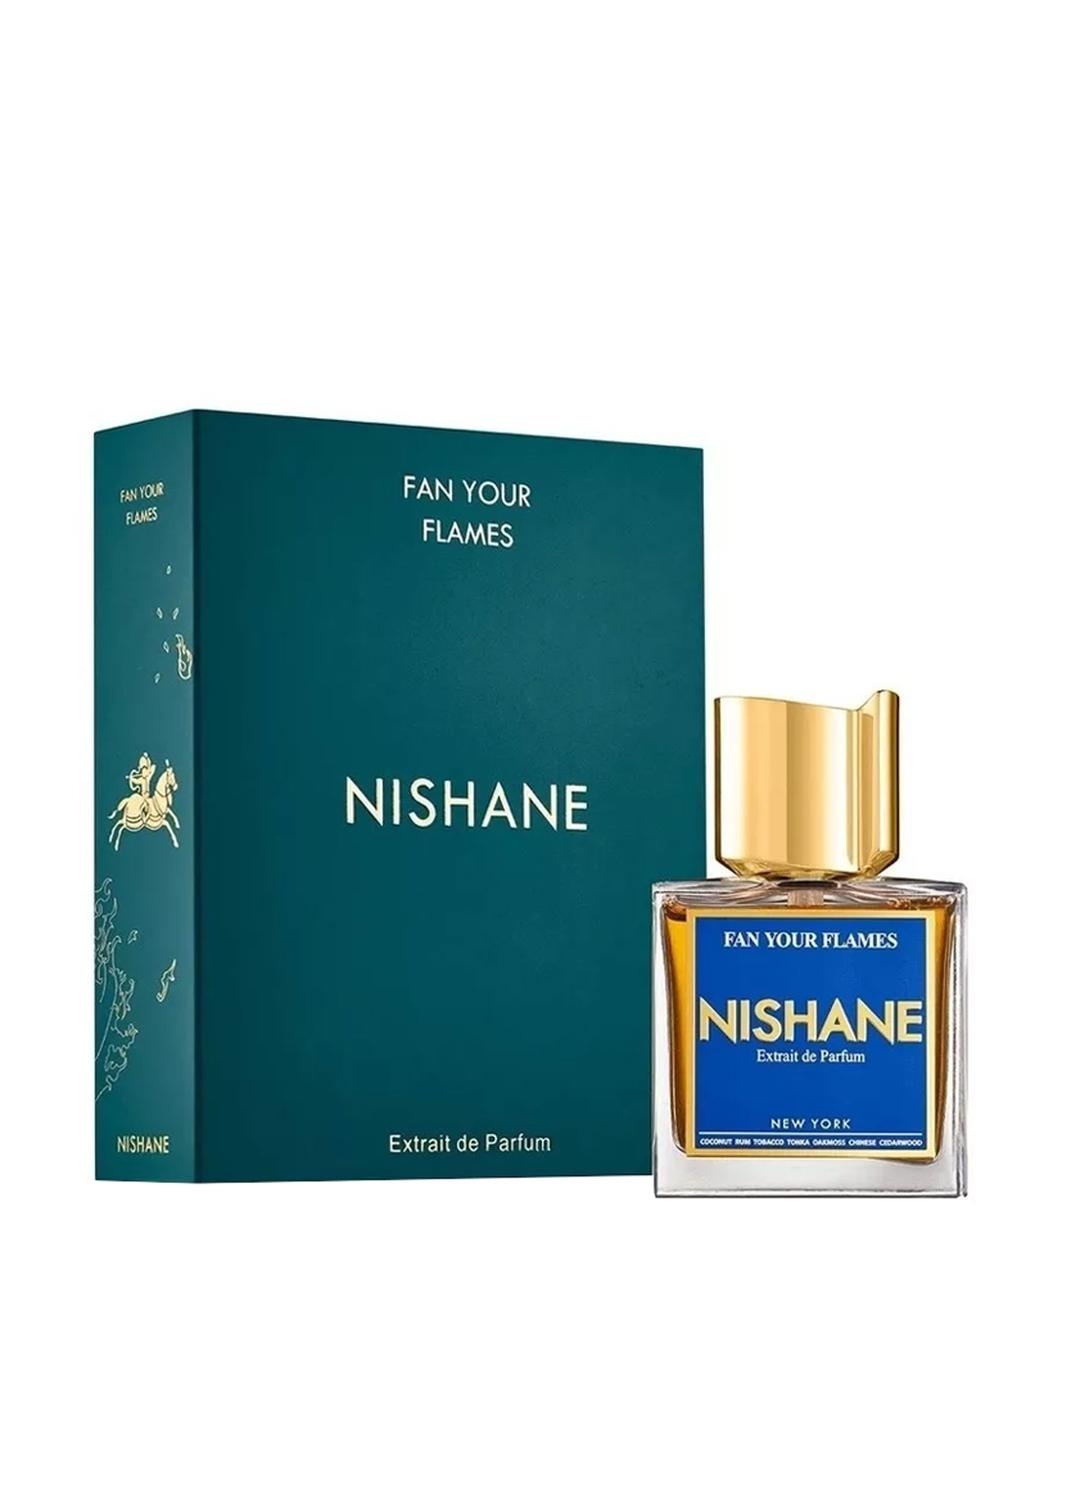 Nishane Fan Your Flames extracto de perfume PNY-FANYOURF